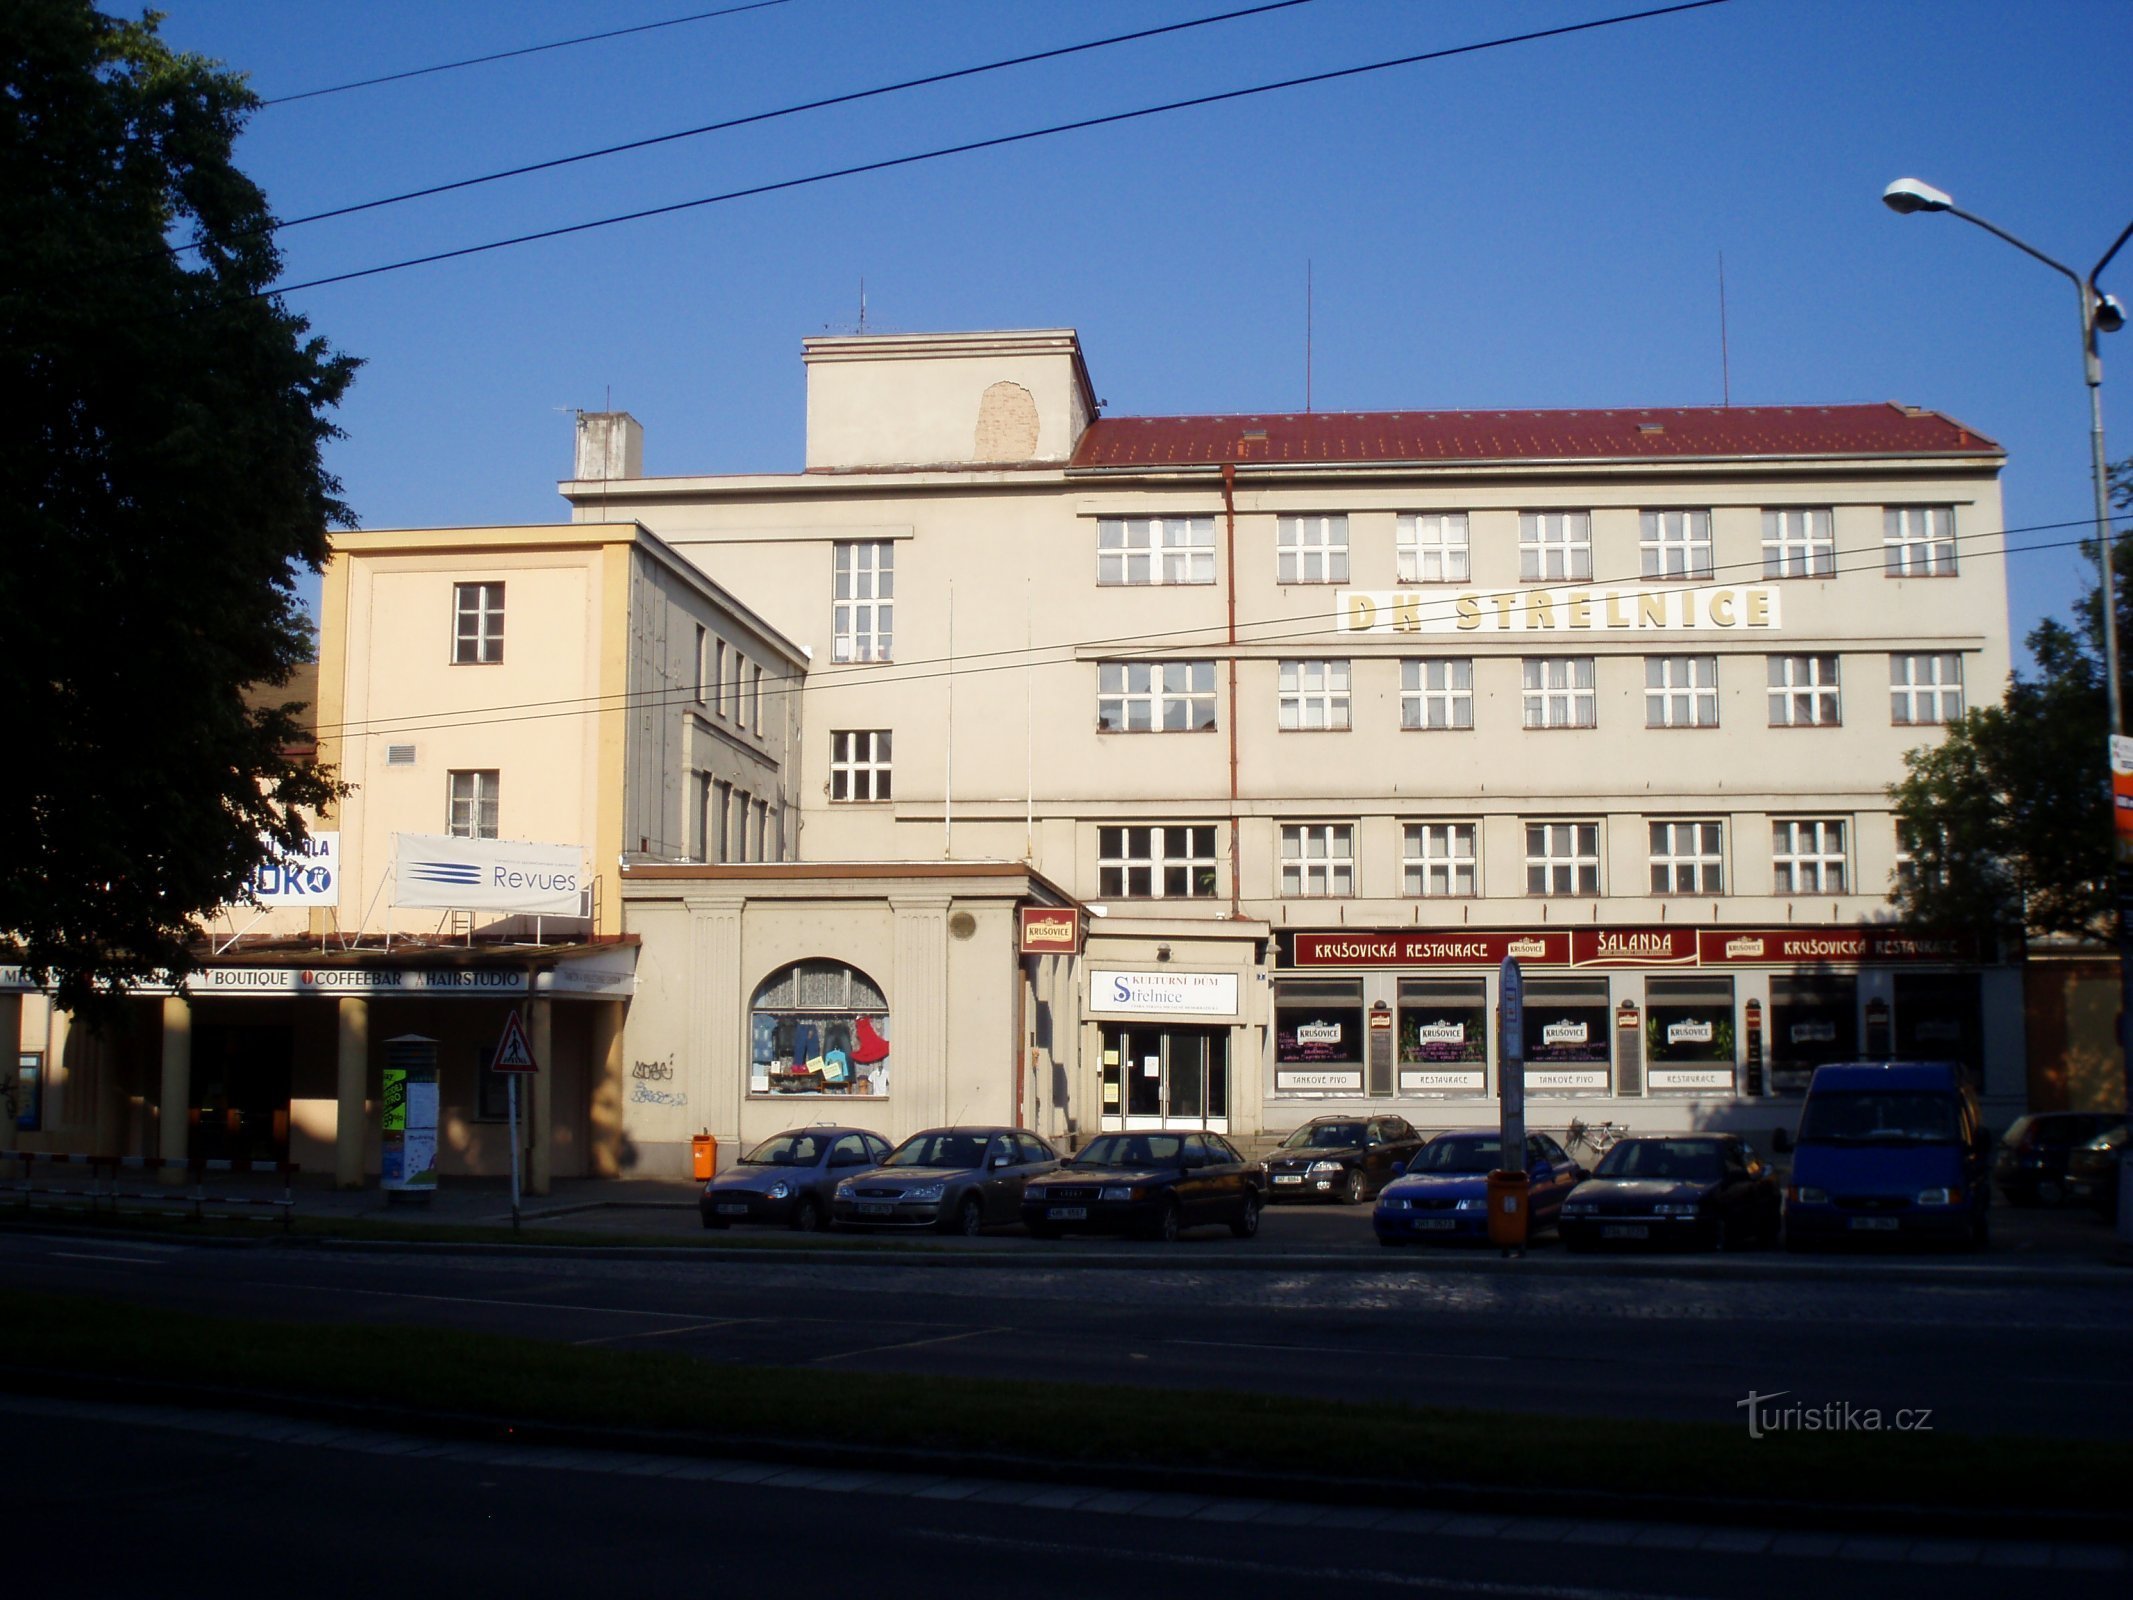 Sadašnji izgled Streljane (Hradec Králové, 11.6.2011.)